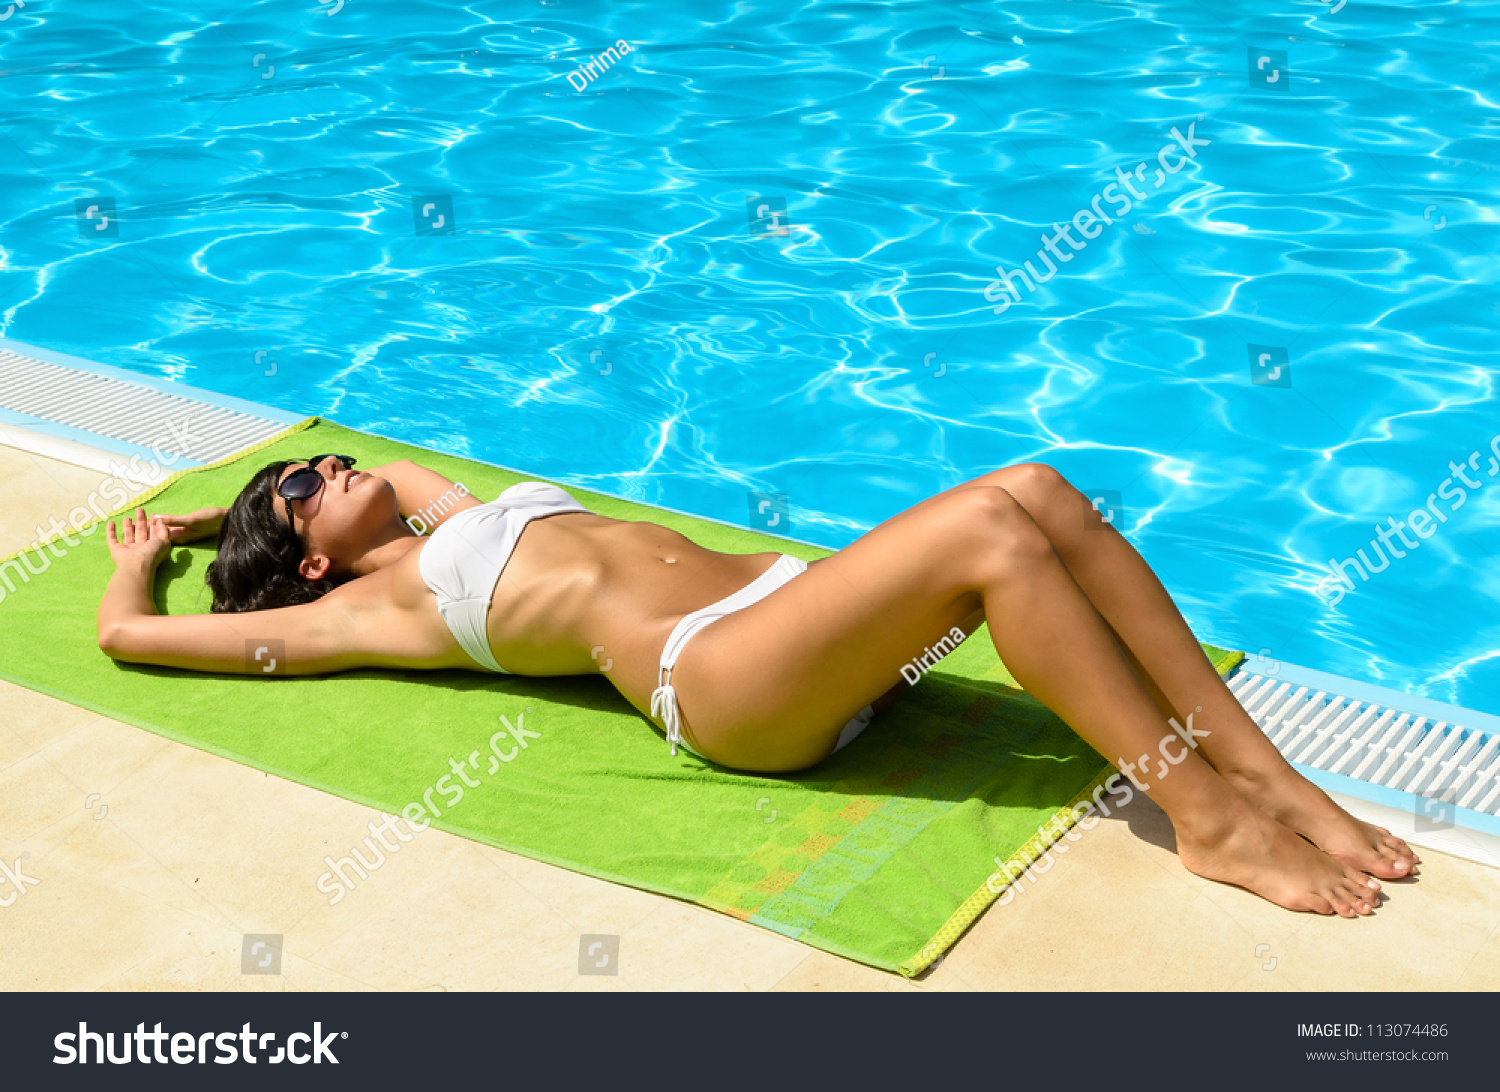 chris merrett recommends Sunbathing By The Pool